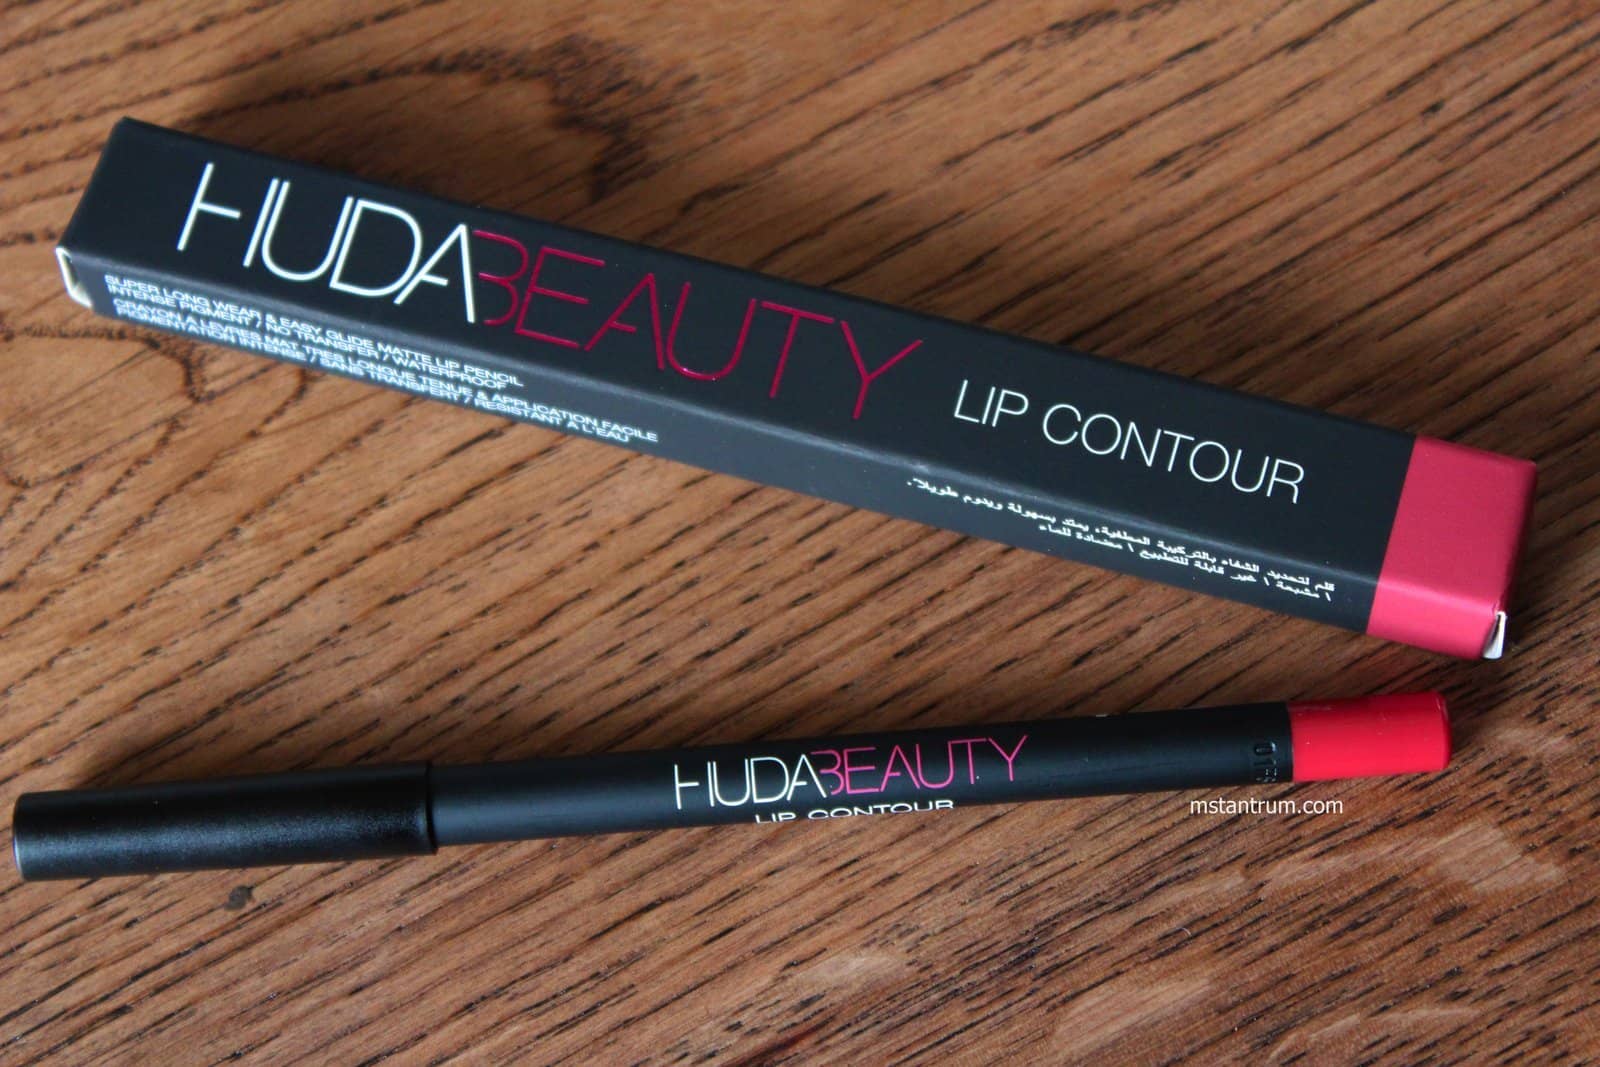 Huda Beauty Lip contour from Cult beauty